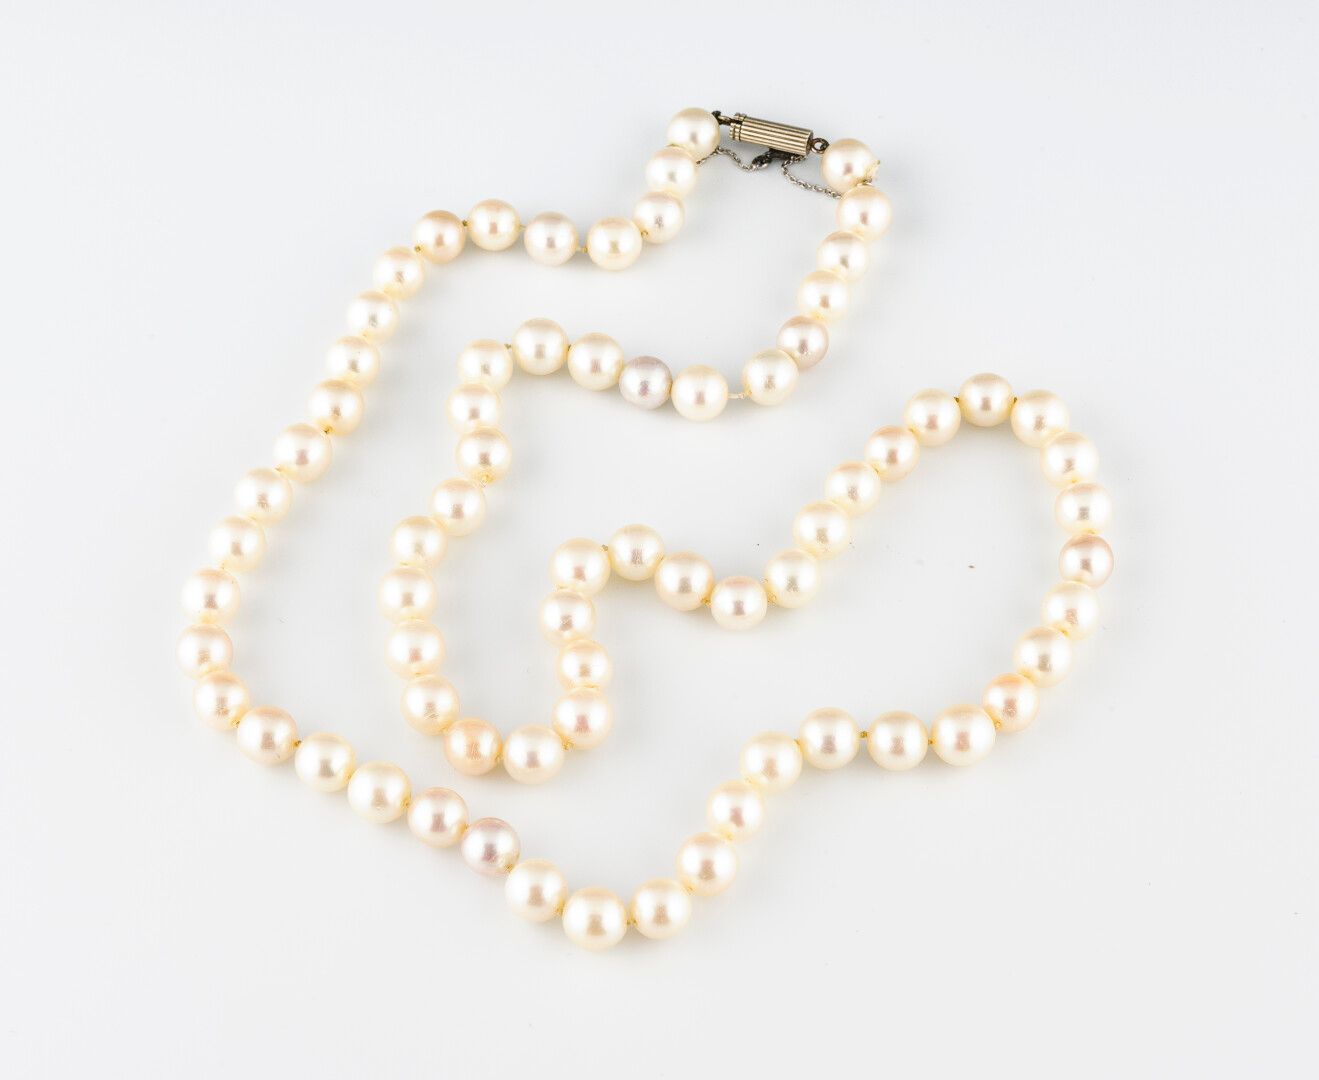 Null 养殖珍珠长吊坠项链

直径约8.2毫米

750°/°的白金表扣，带小圆点

配有银色950°/°安全链

毛重：55.51克

长度：33厘米